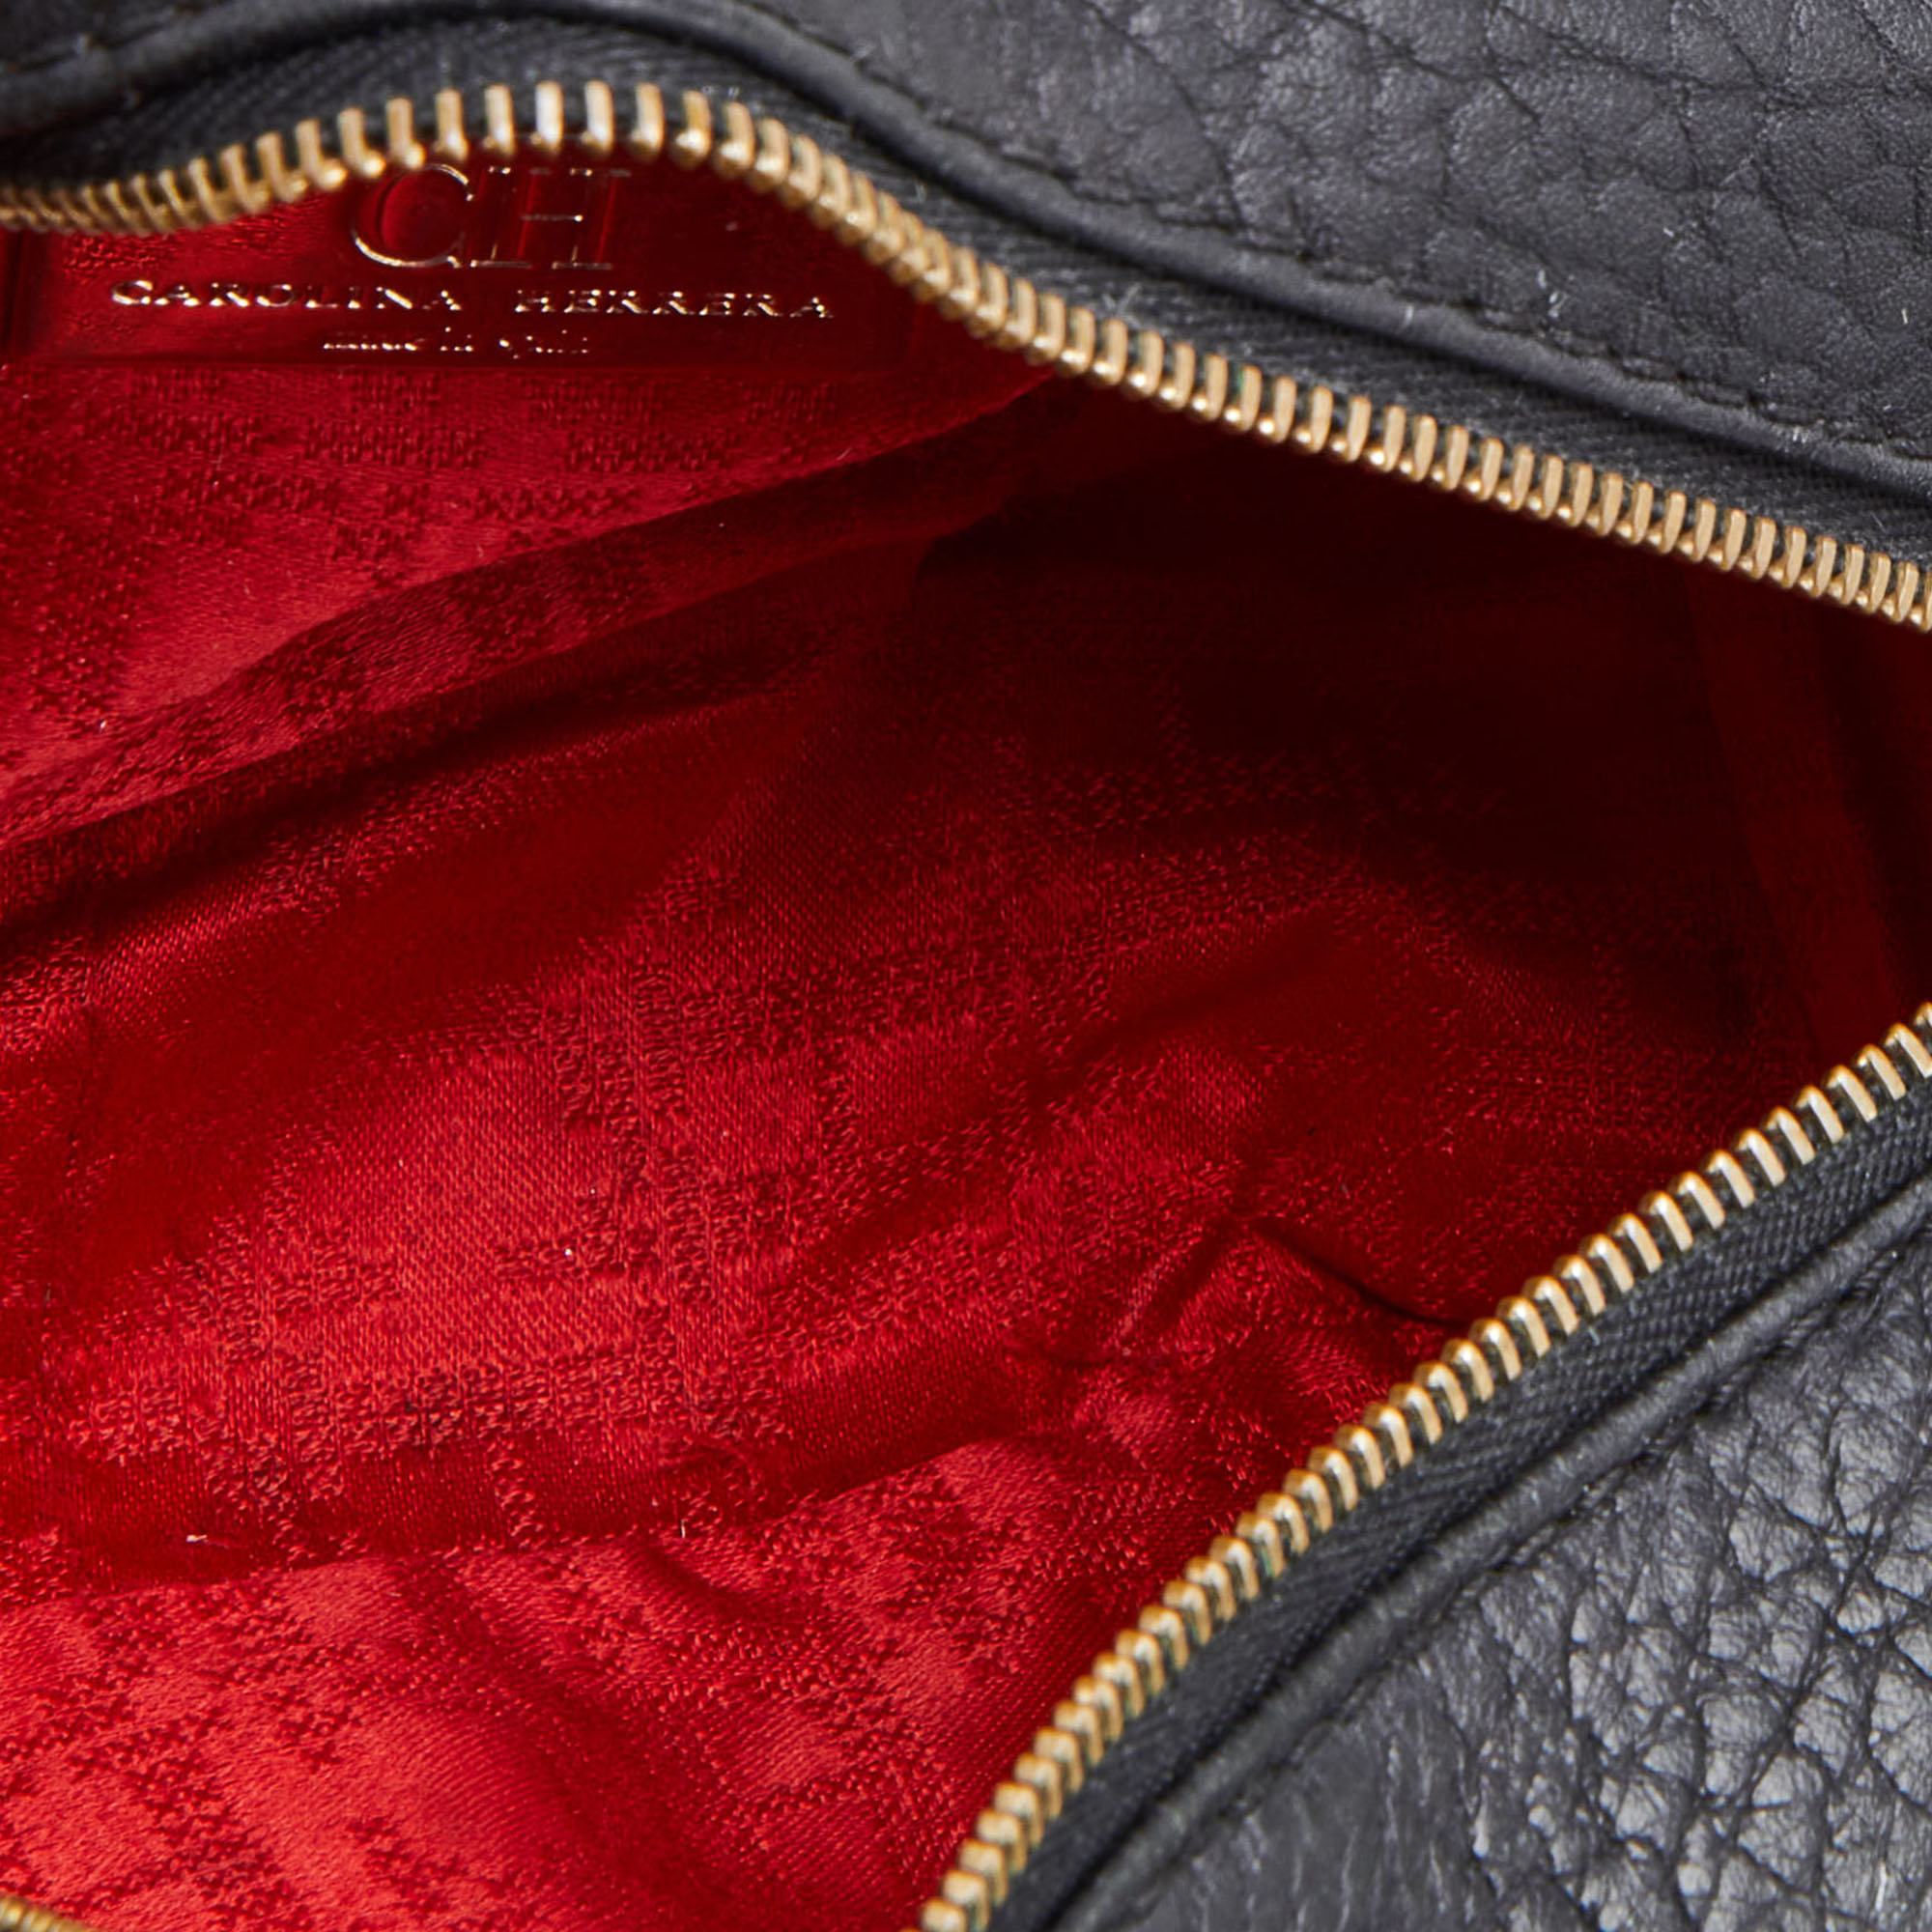 CH Carolina Herrera Black Leather Crossbody Bag